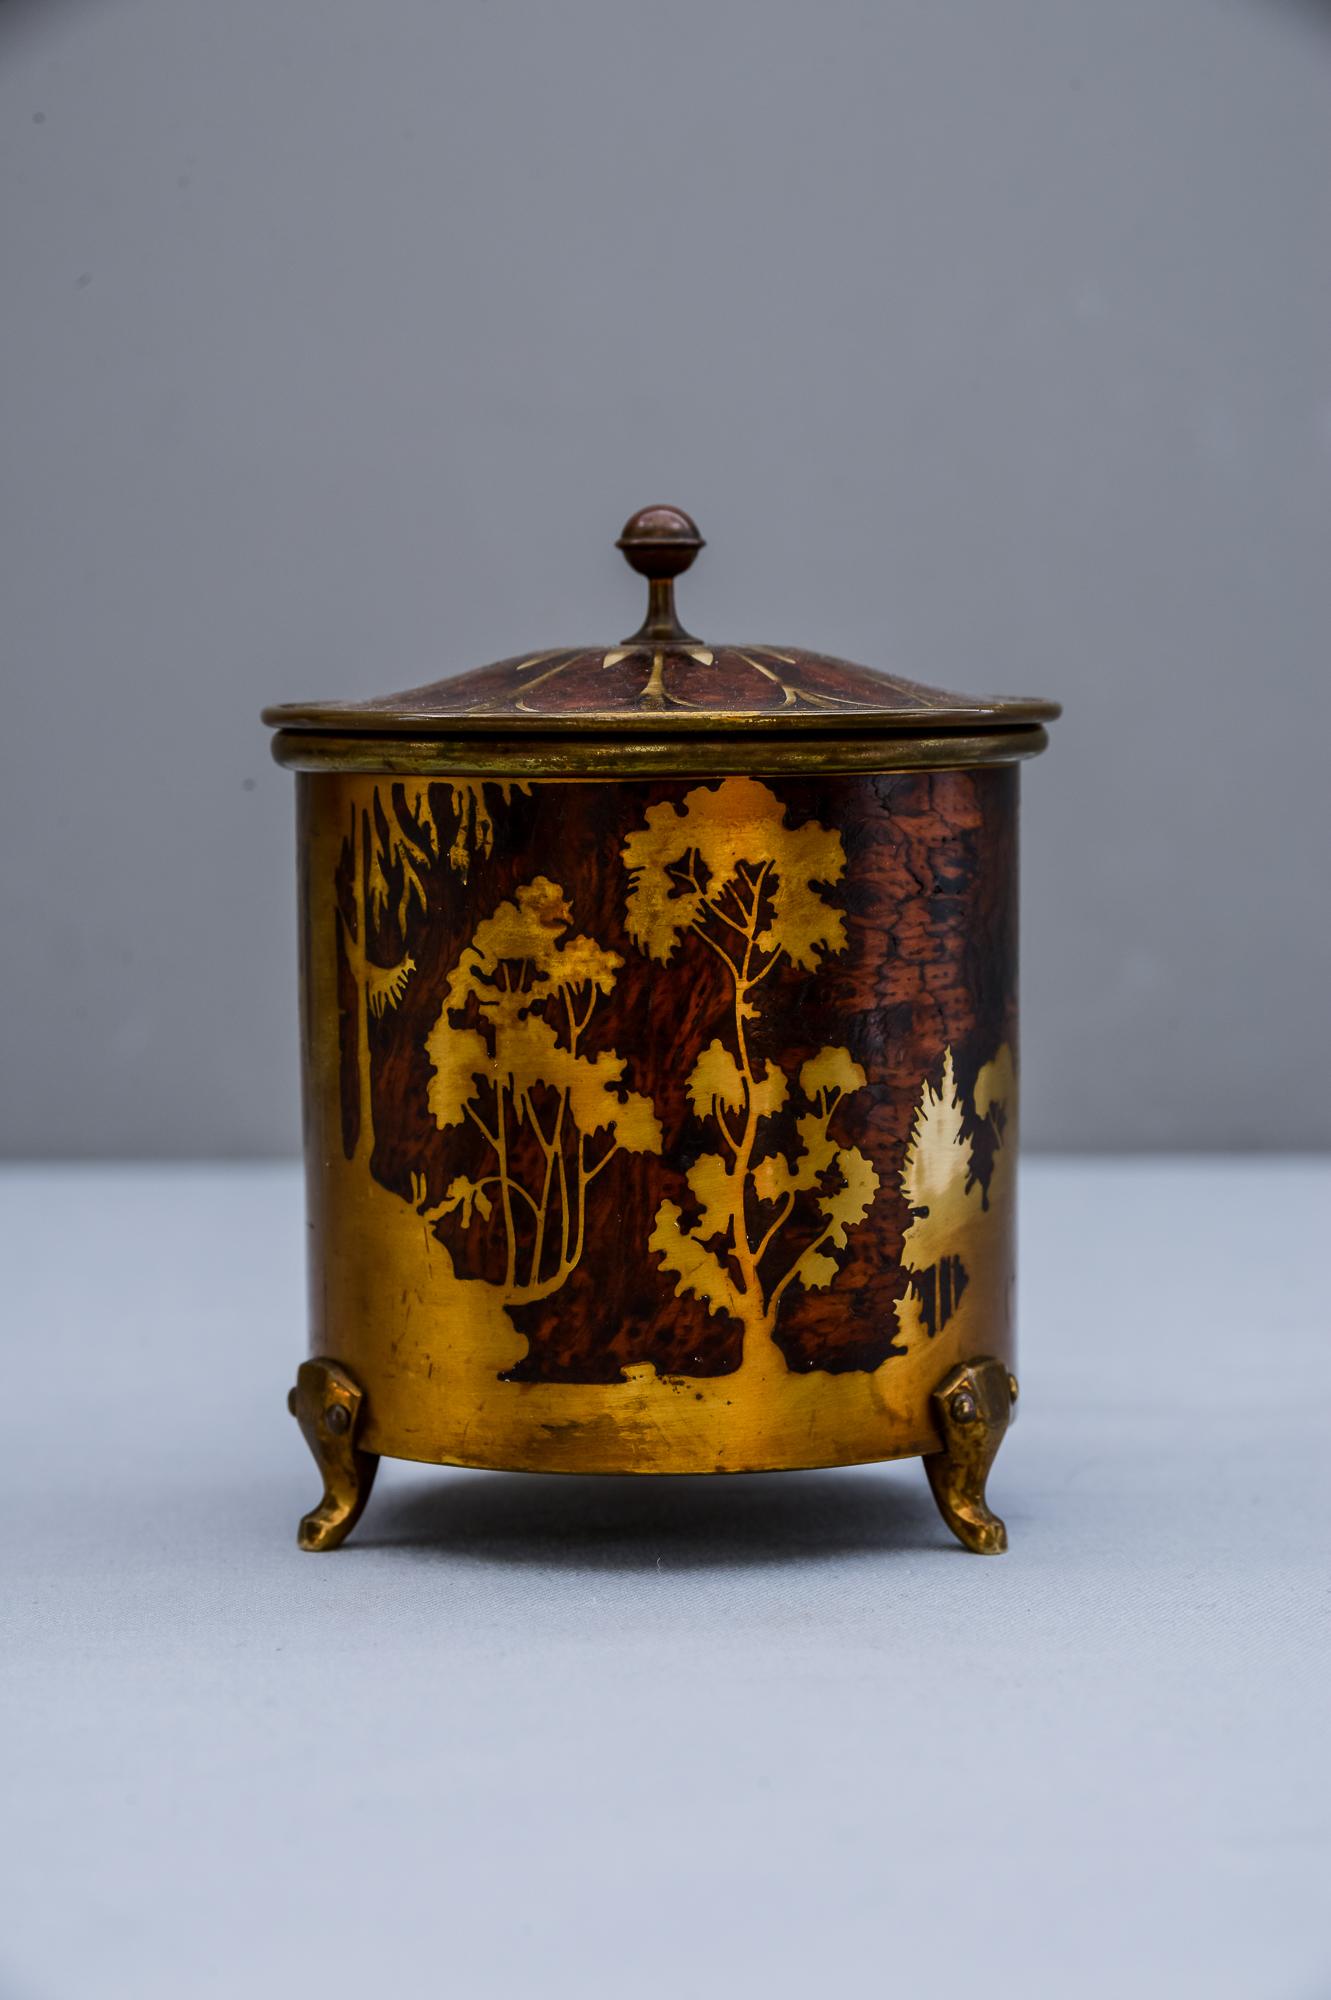 Art Deco Arts & Crafts brass and wood round box by Erhard & Sohne Vienna circa 1920s
Original condition.